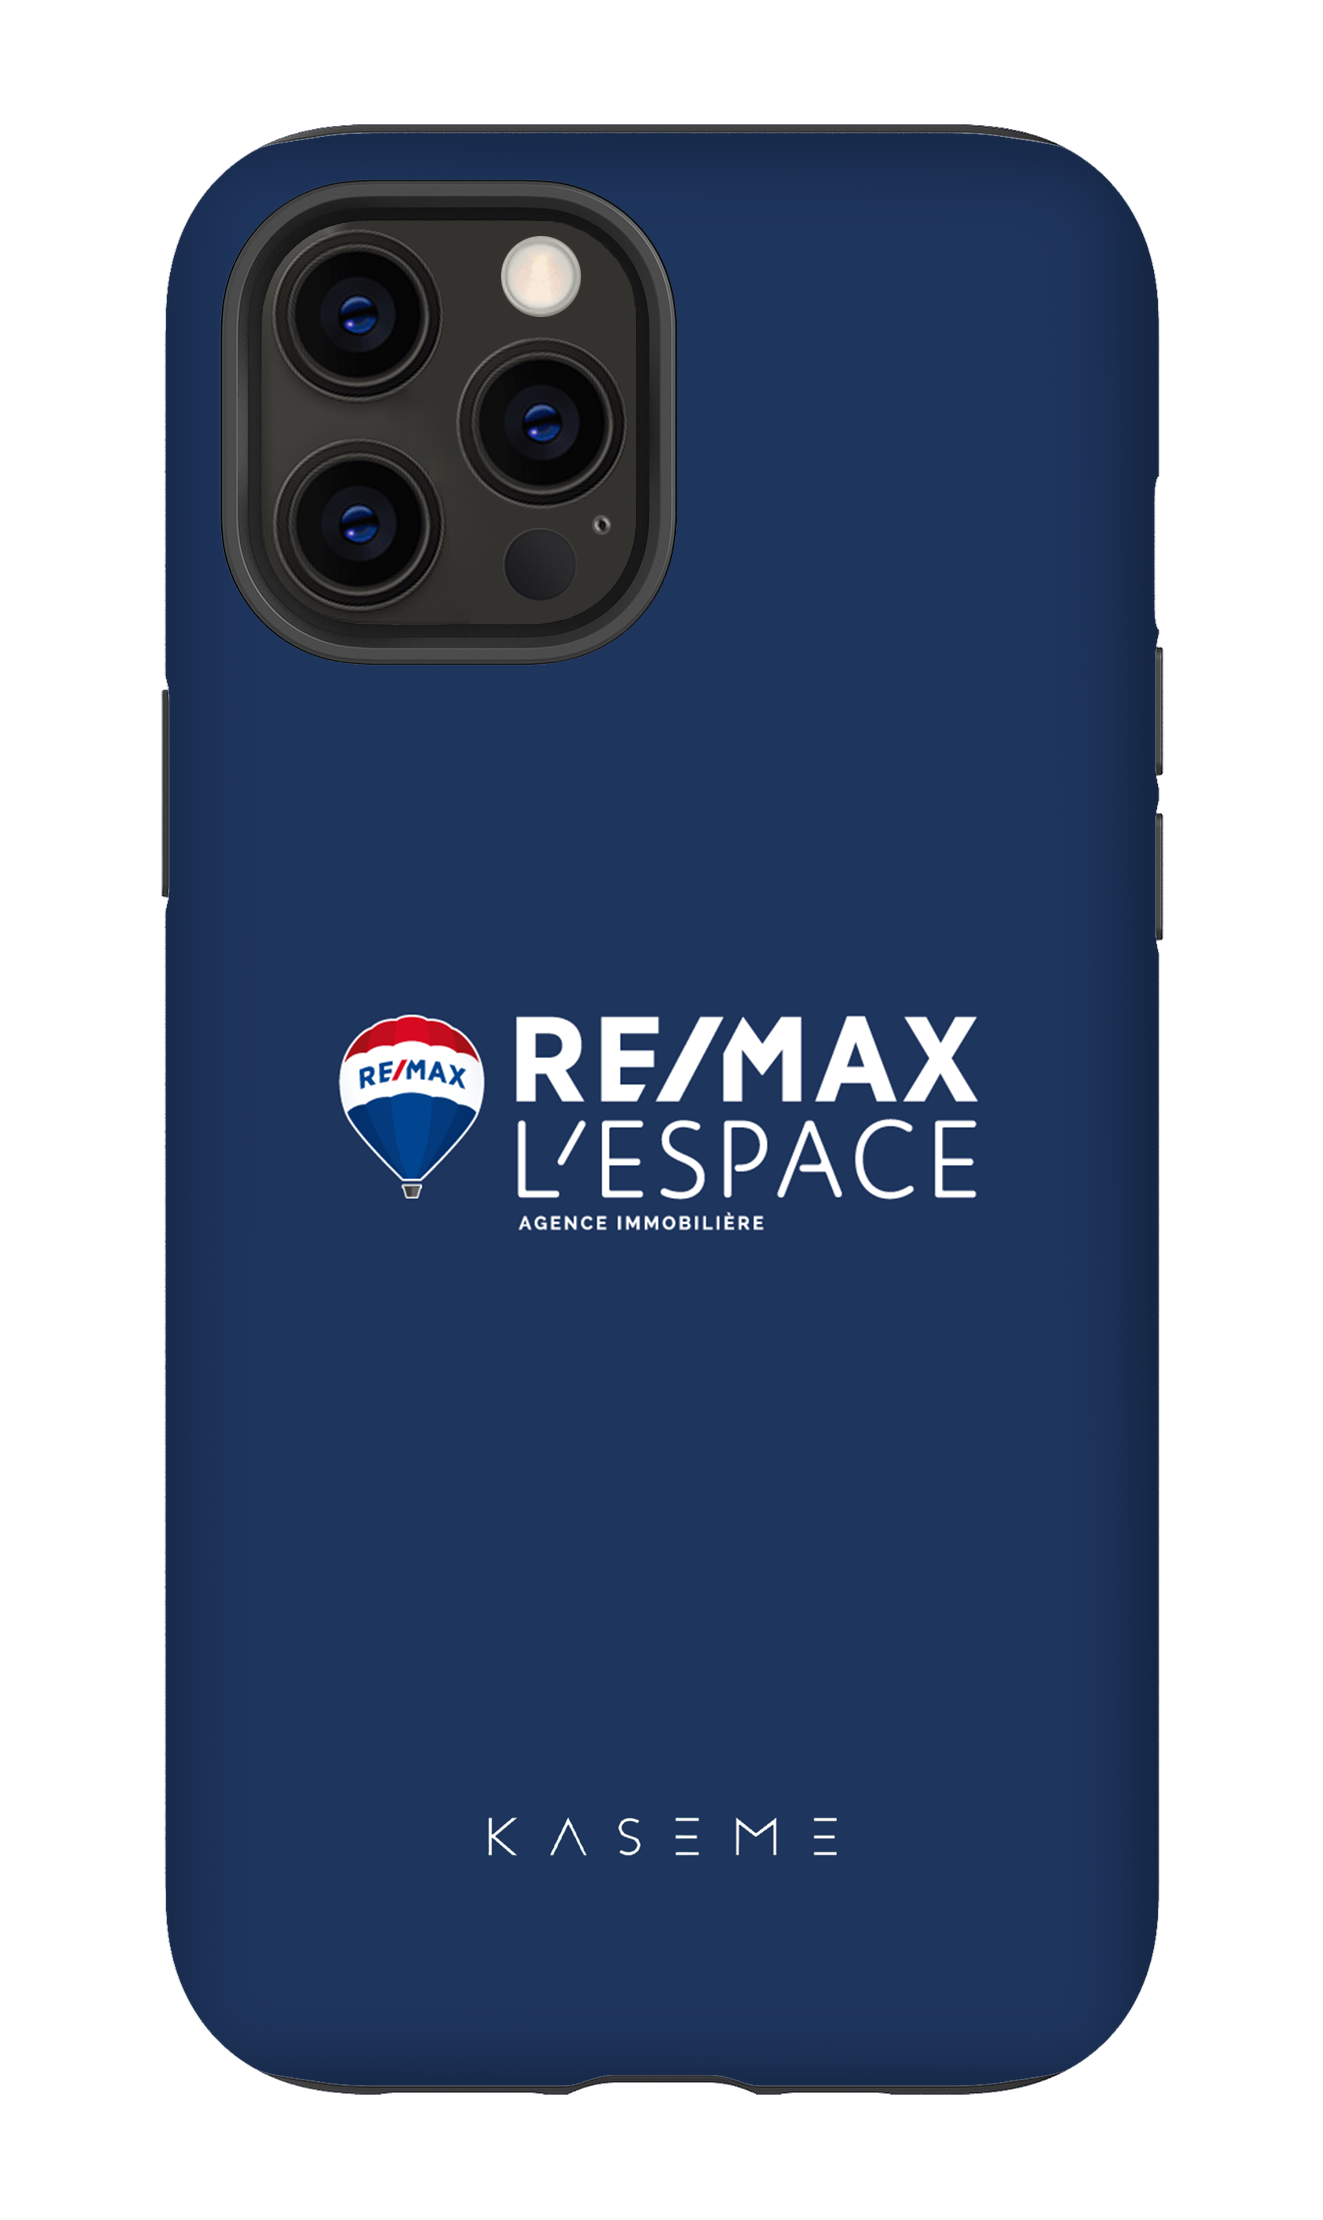 Remax L'Espace Blanc - iPhone 12 Pro Max